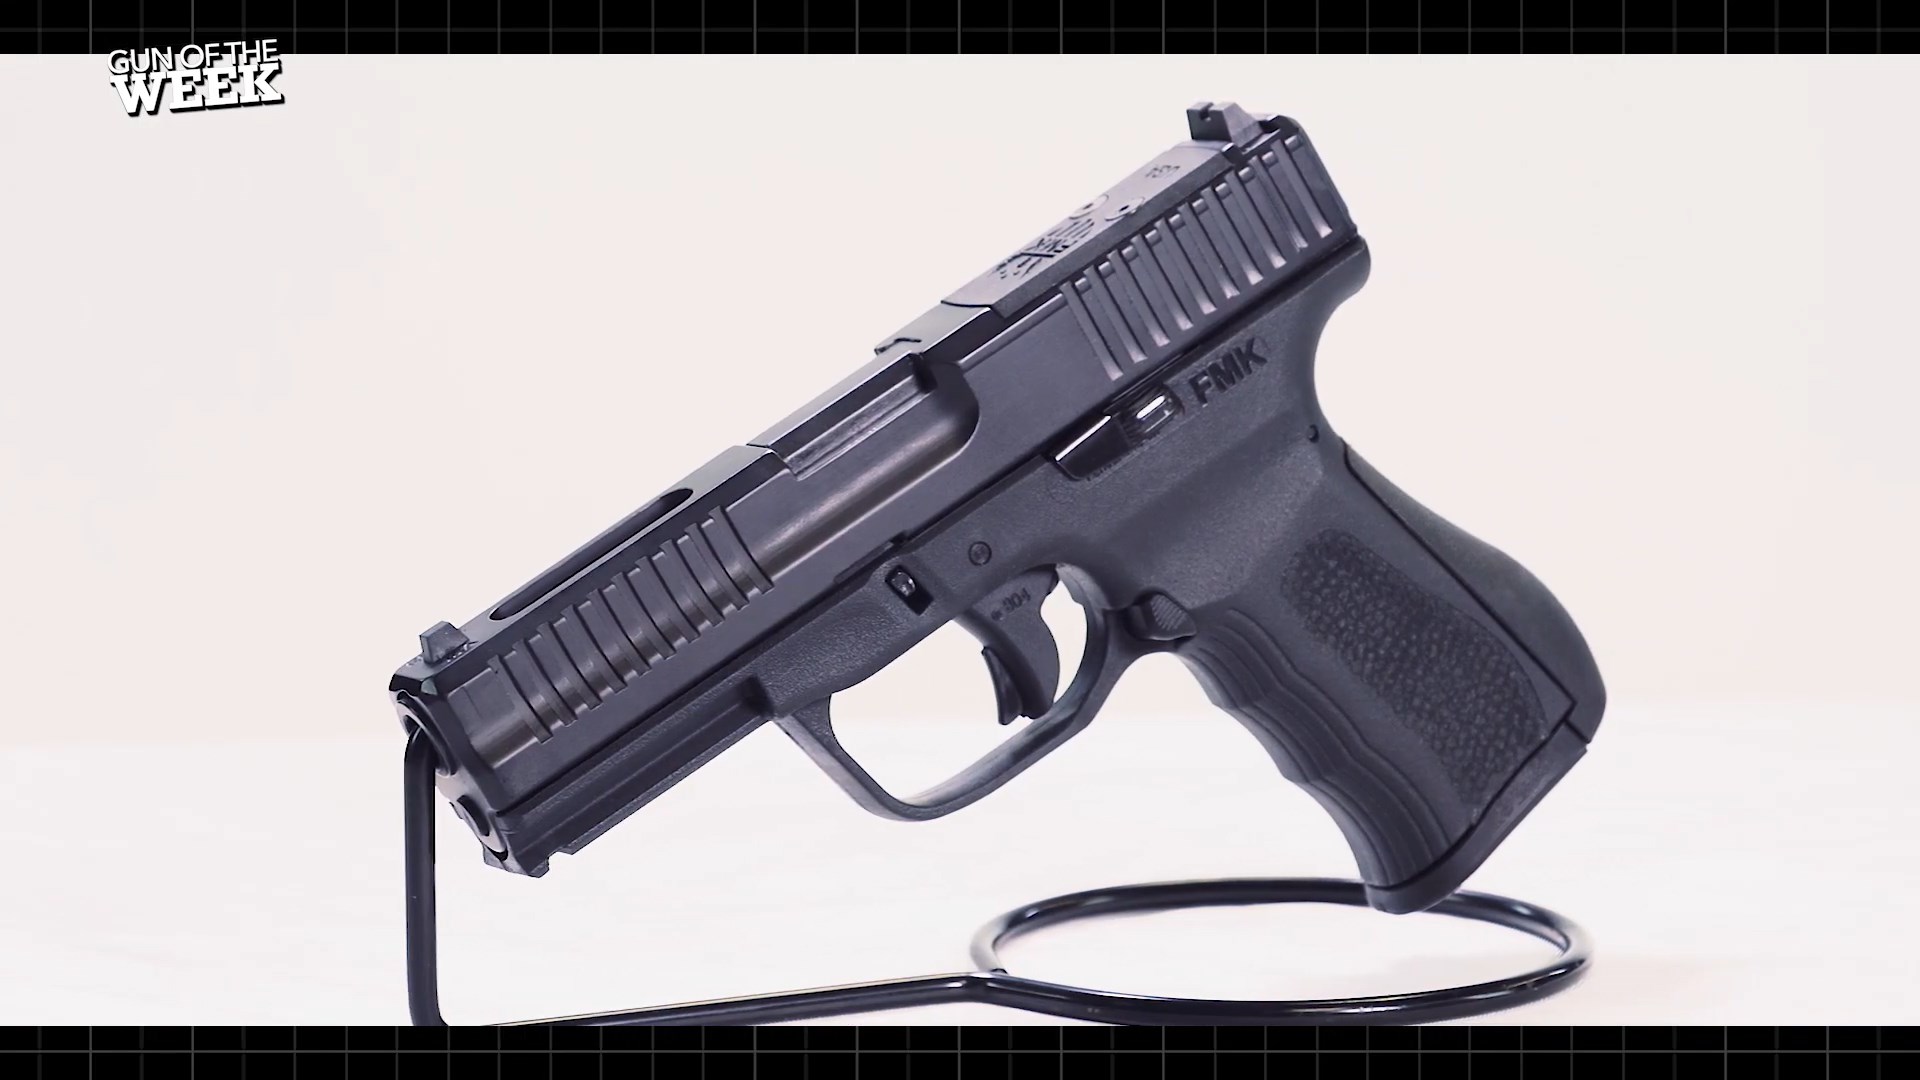 FMK Firearms left-side view black handgun pistol 9 mm gun on stand with white background